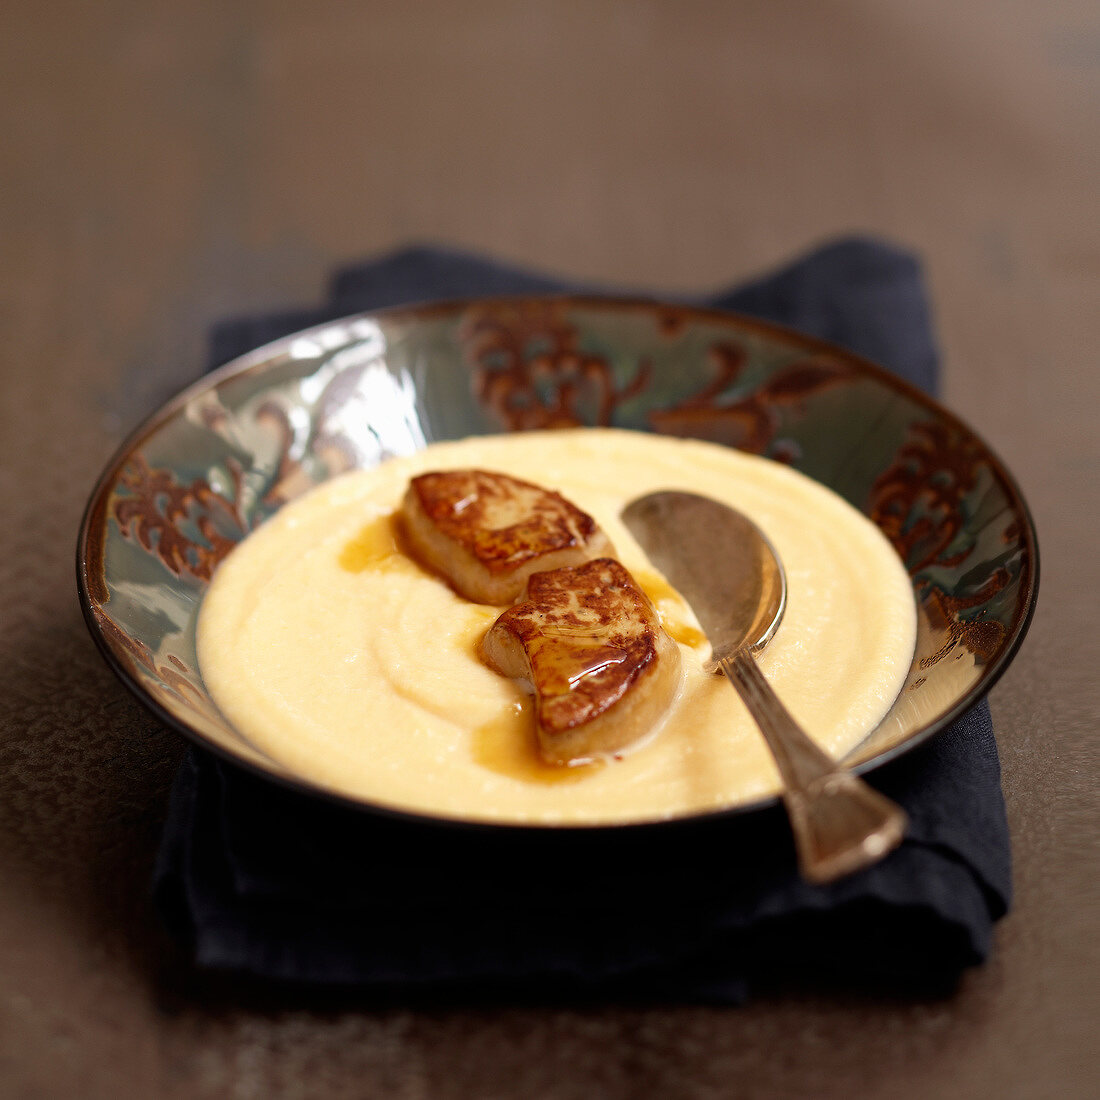 Cream of swedish turnip soup with pan-fried foie gras